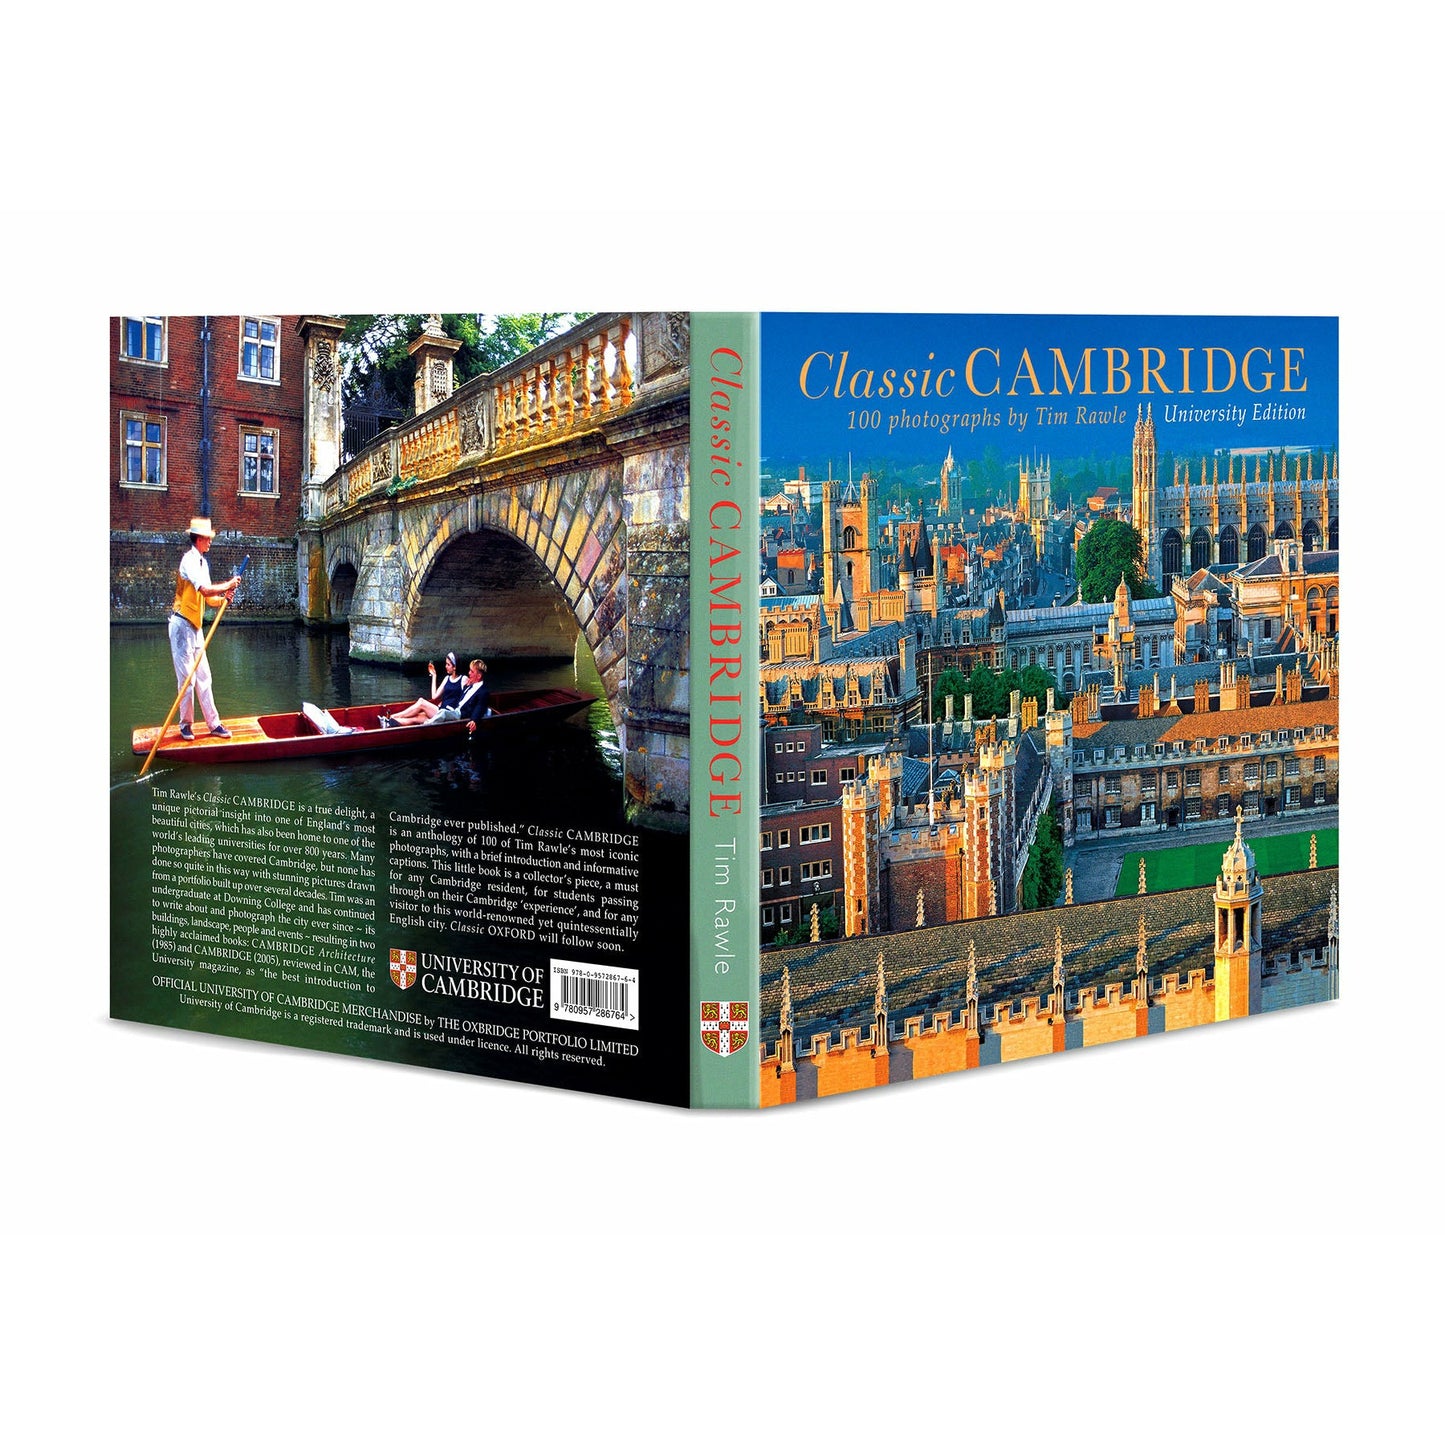 Classic Cambridge - Photography book